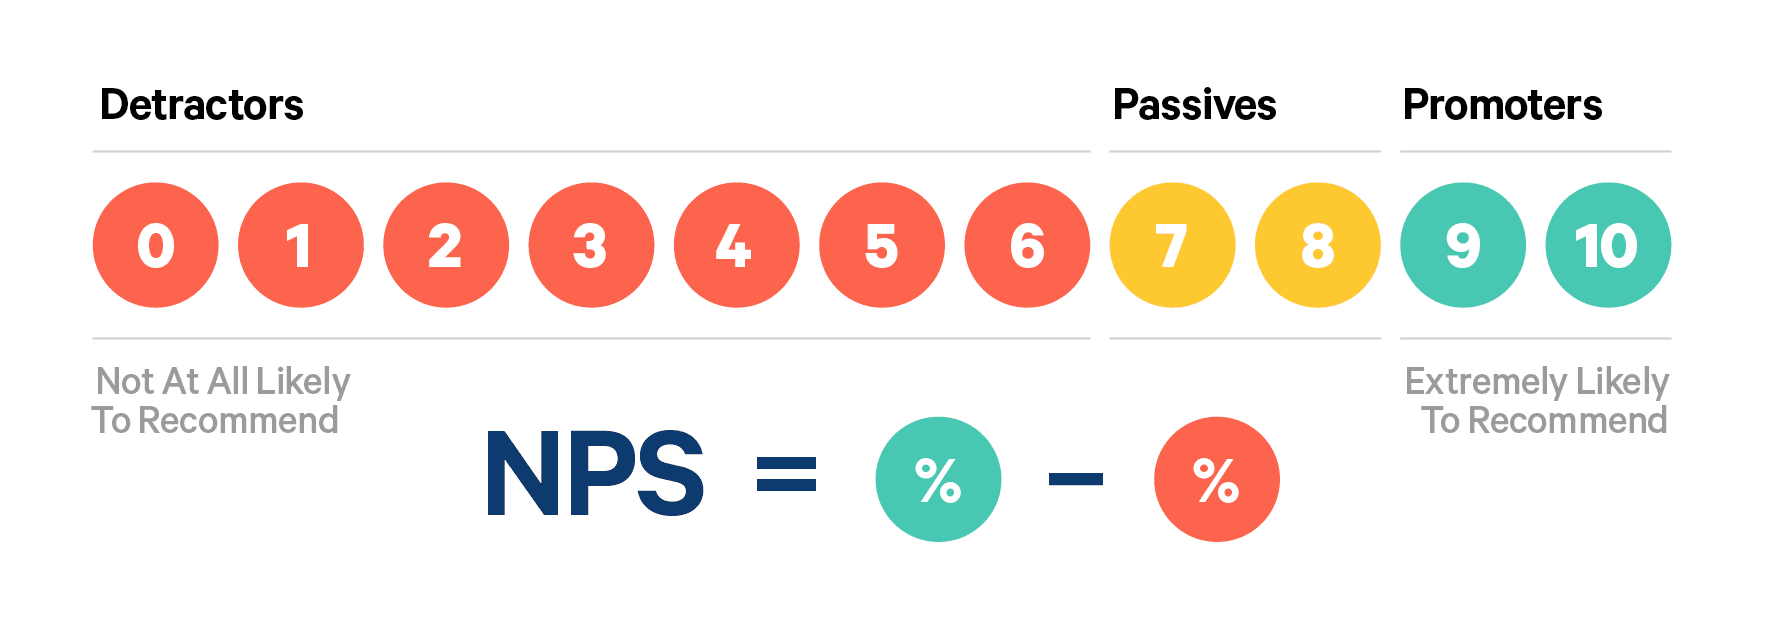 NPS scale representation